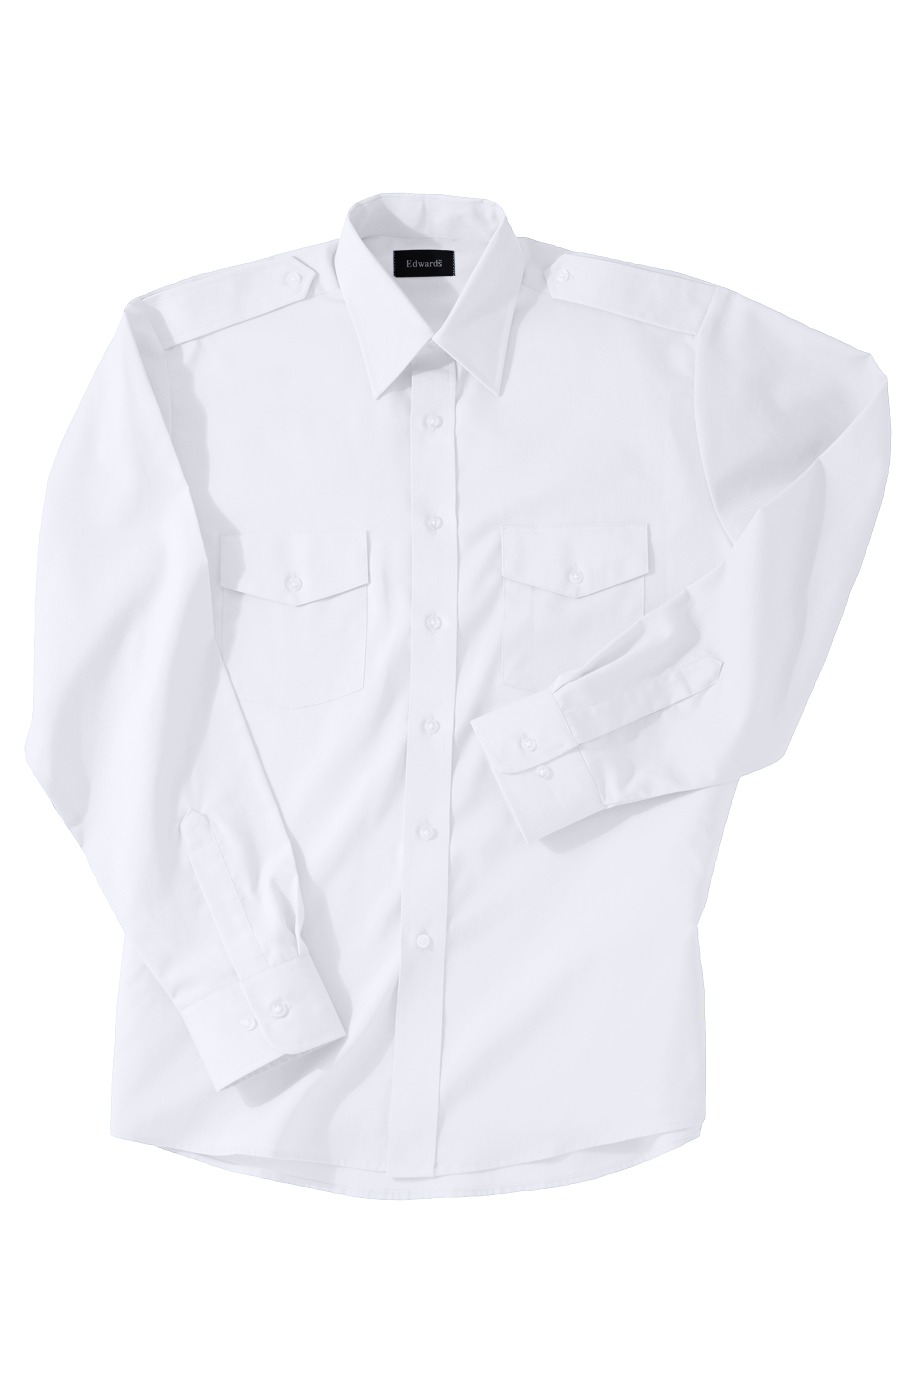 Edwards Garment 1262 - Men's Long Sleeve Navigator Shirt